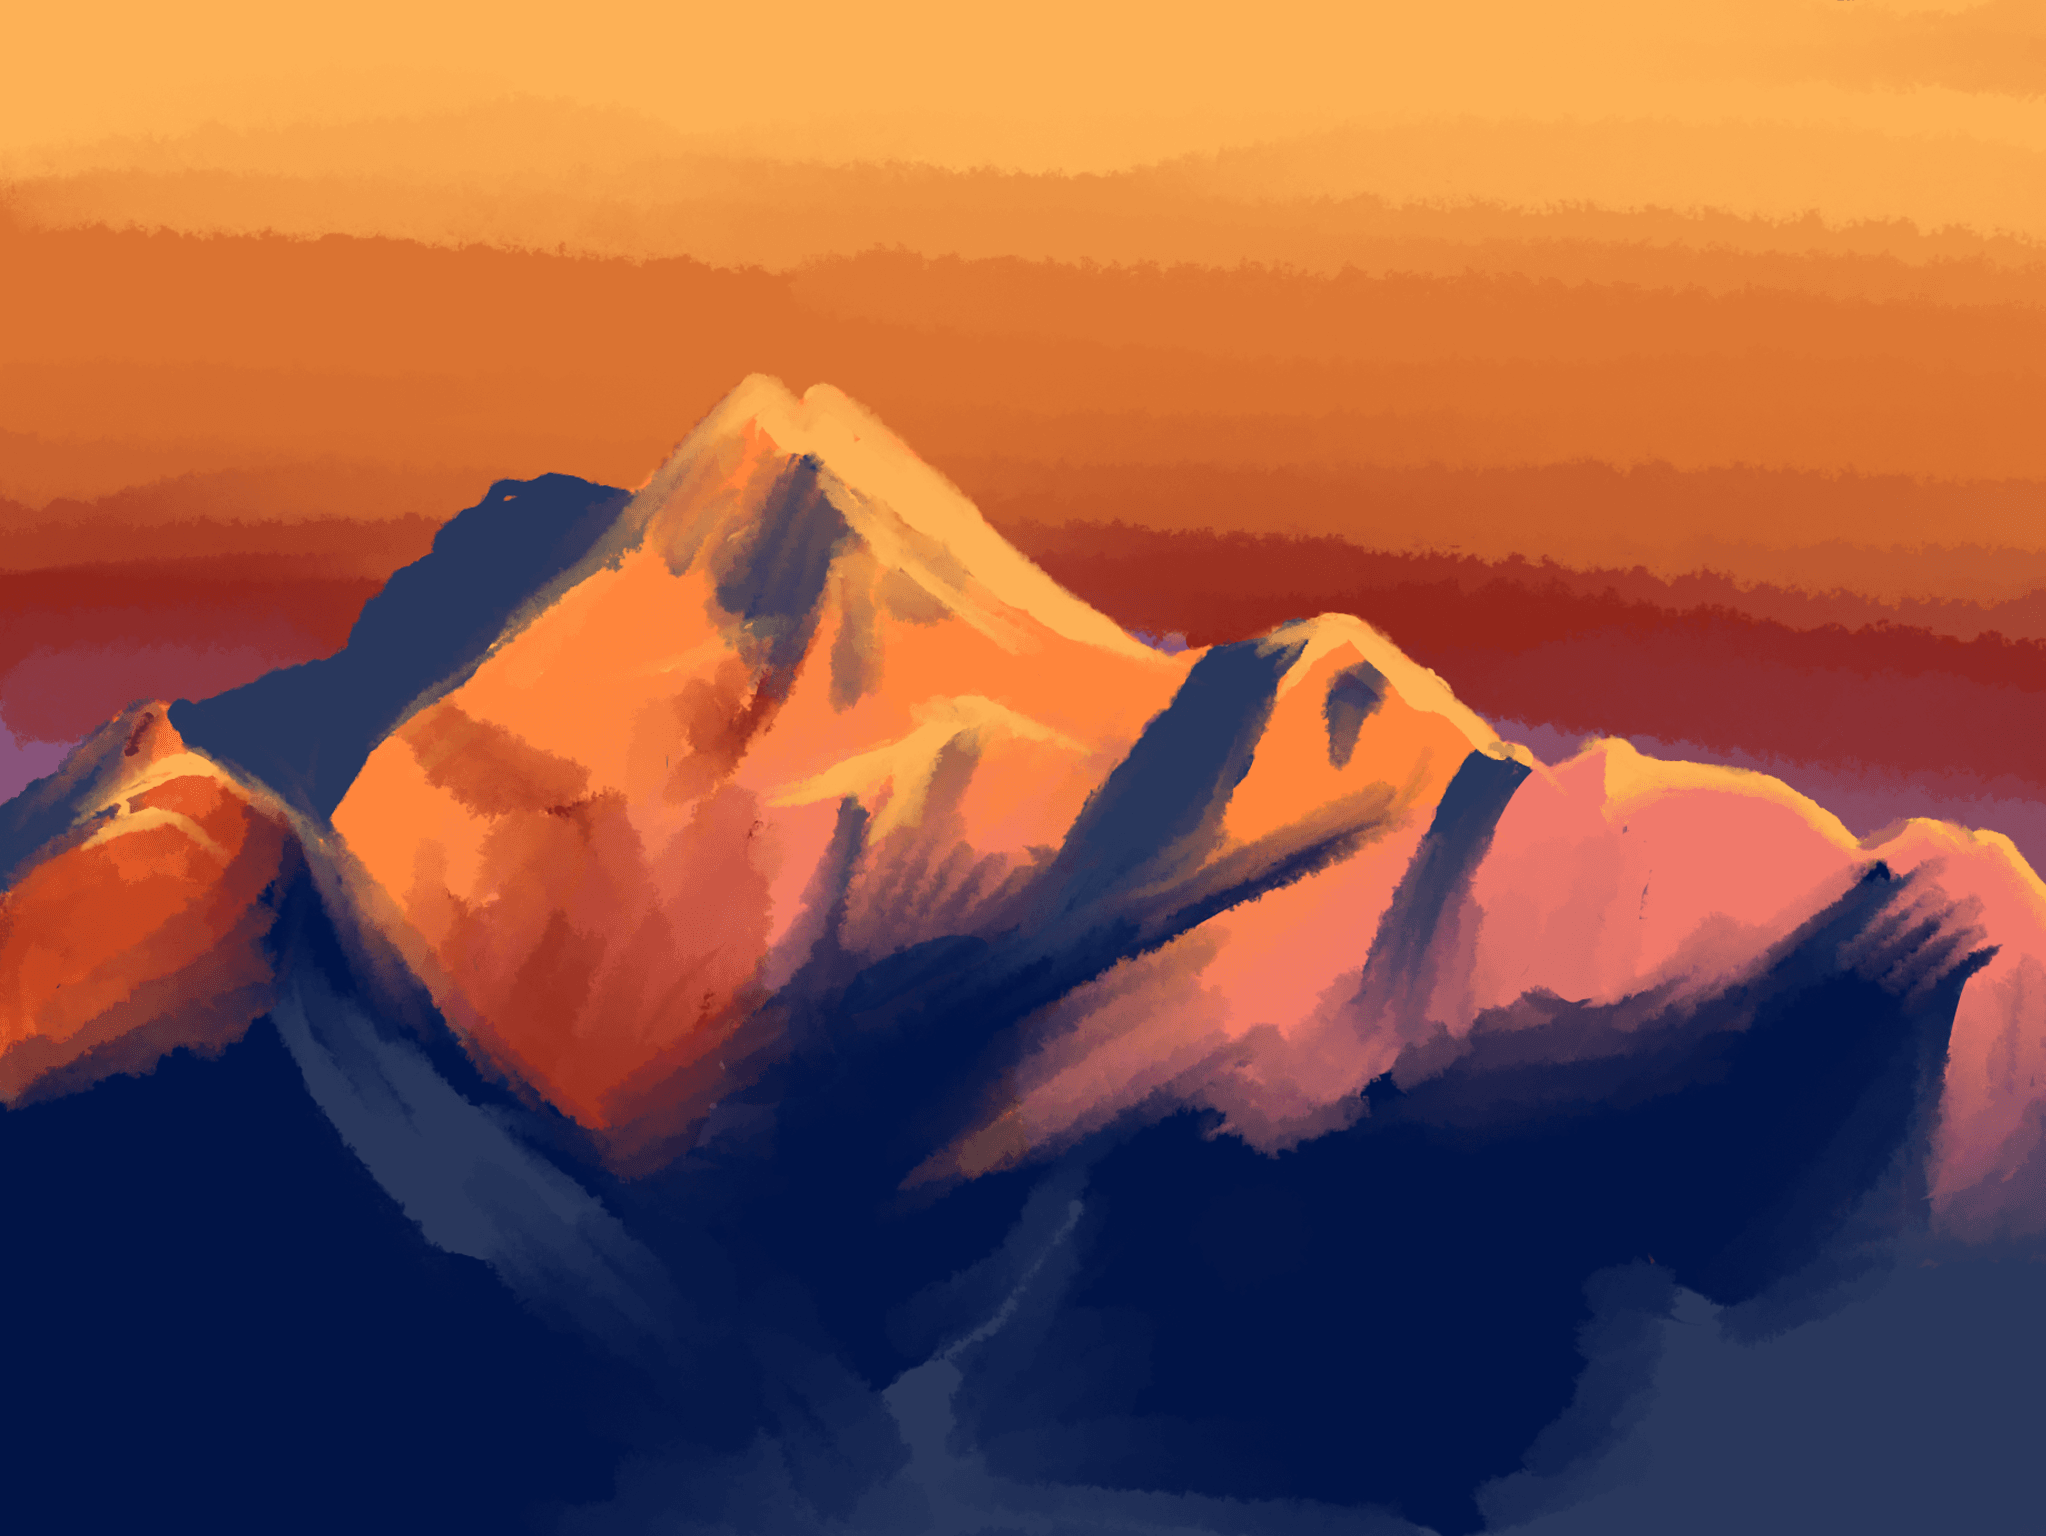 Mountain range at sunset, digital art